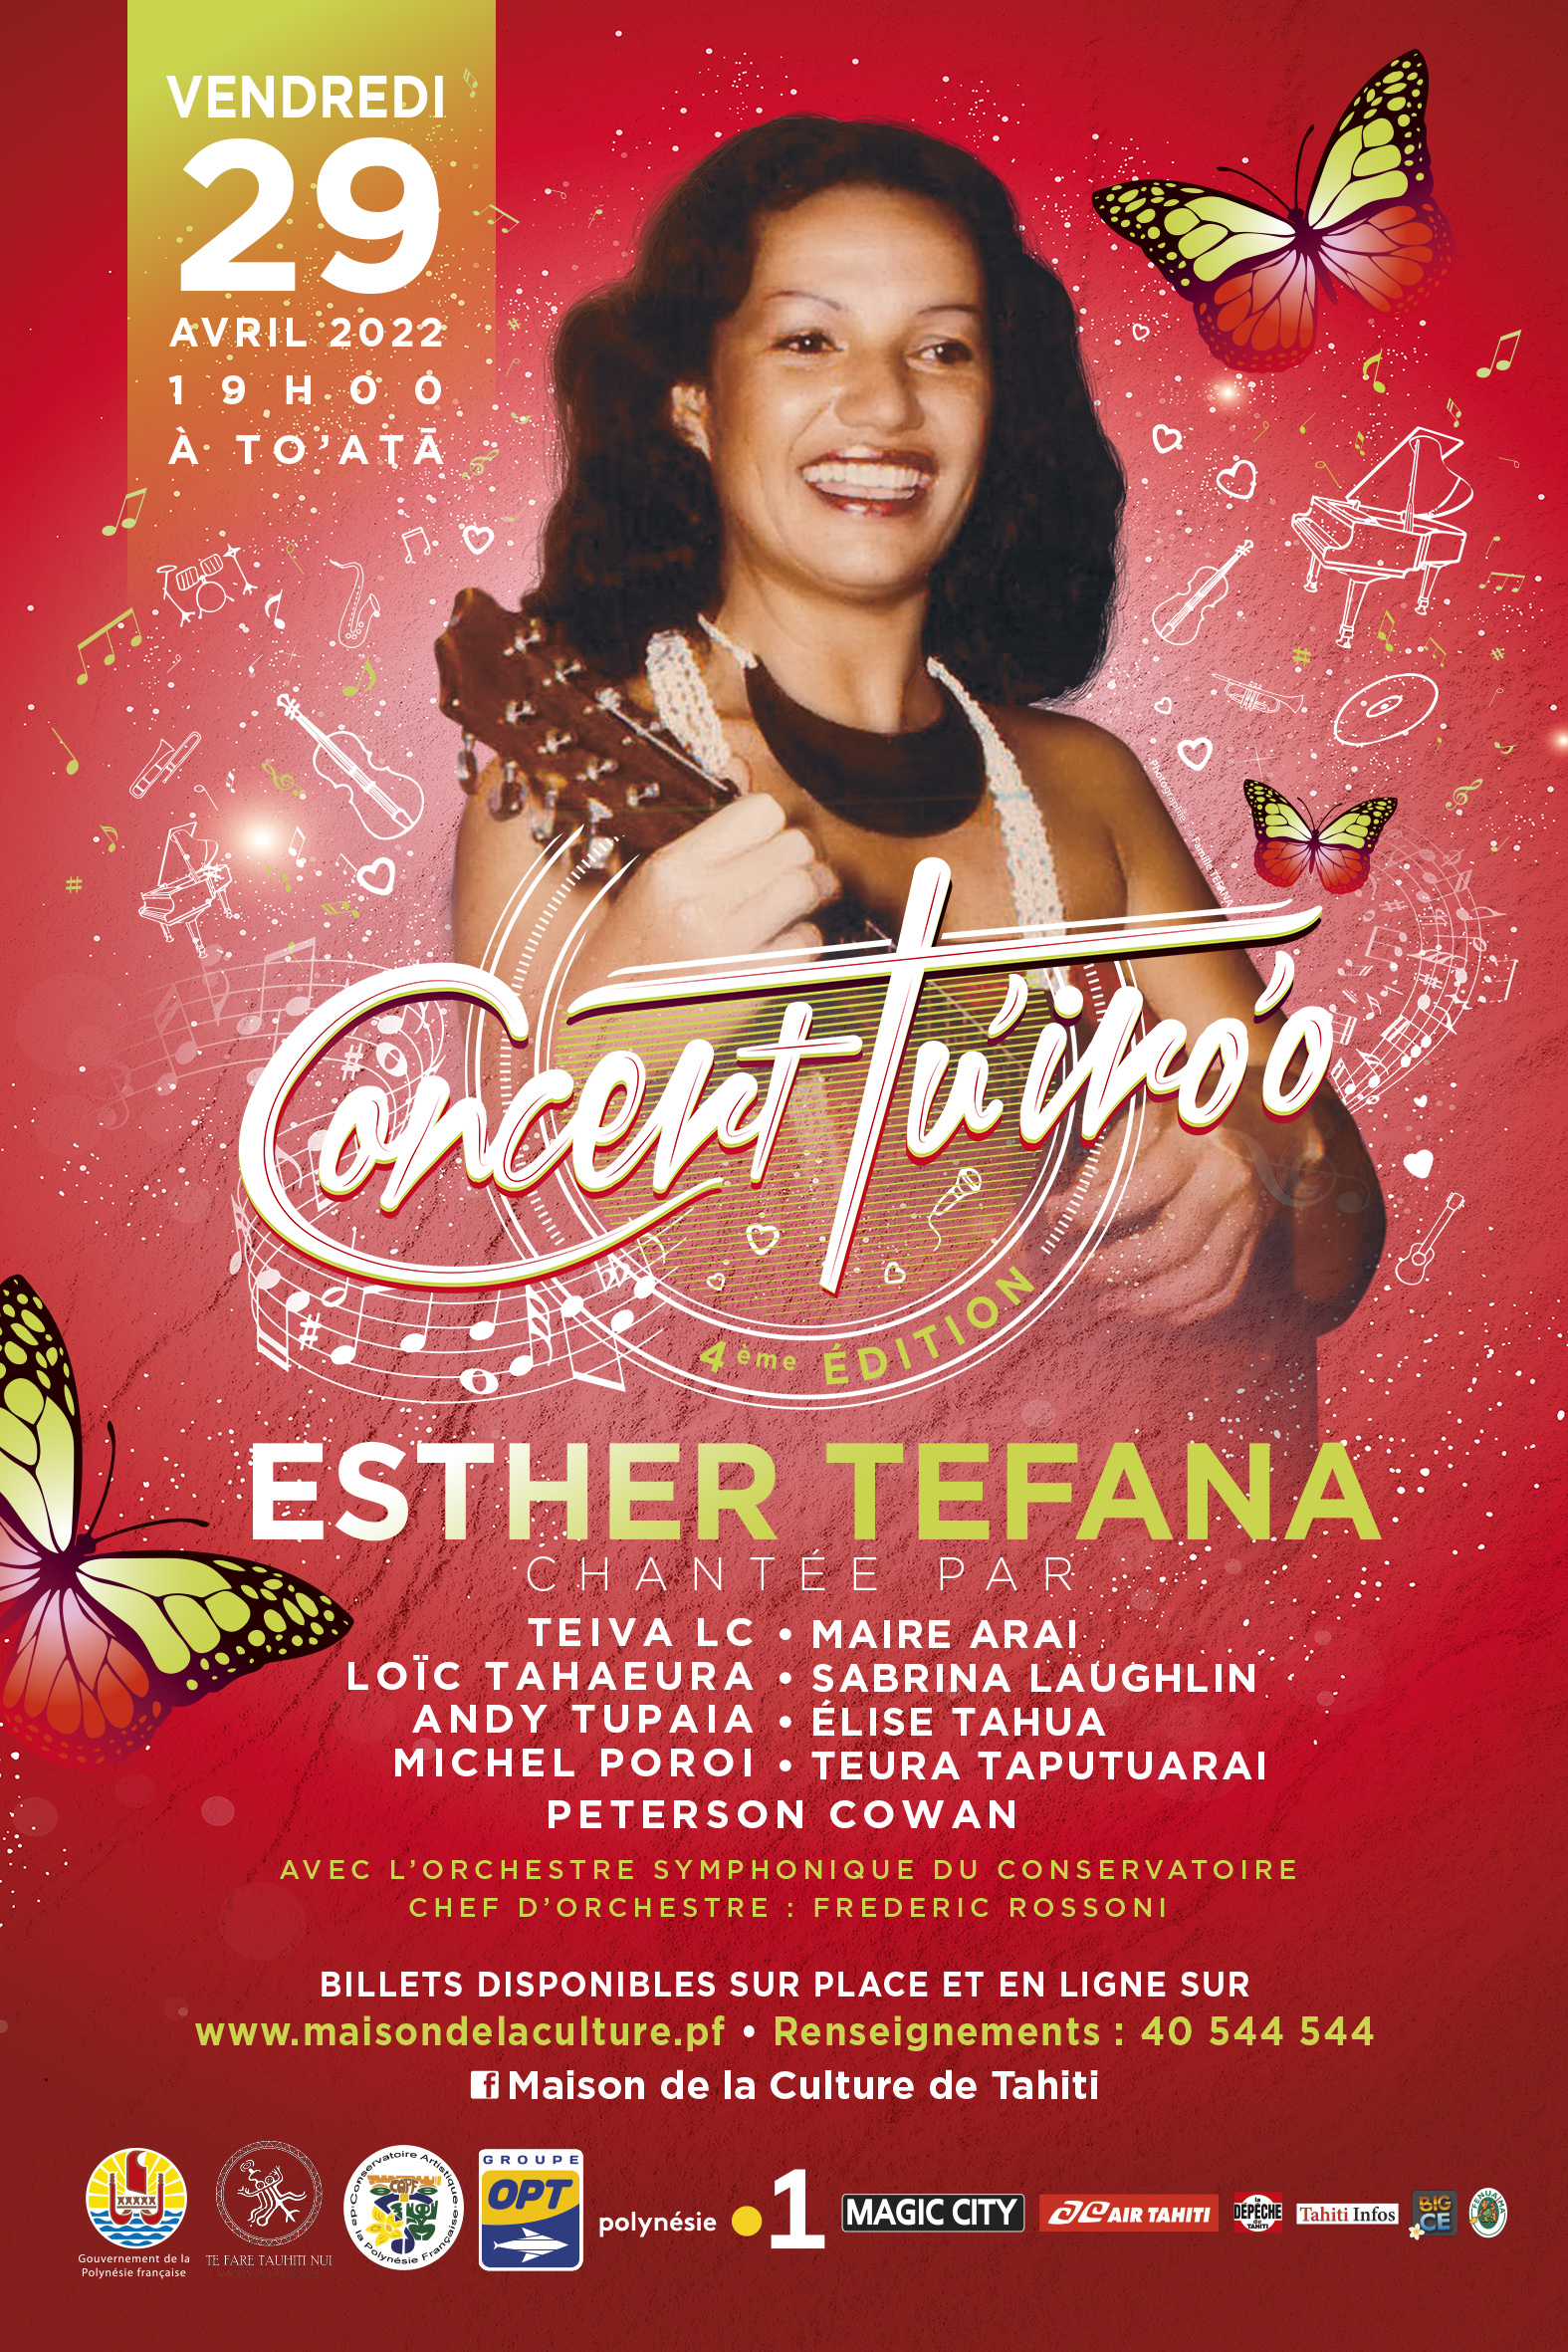 Tu'iro'o en hommage à Esther Tefana